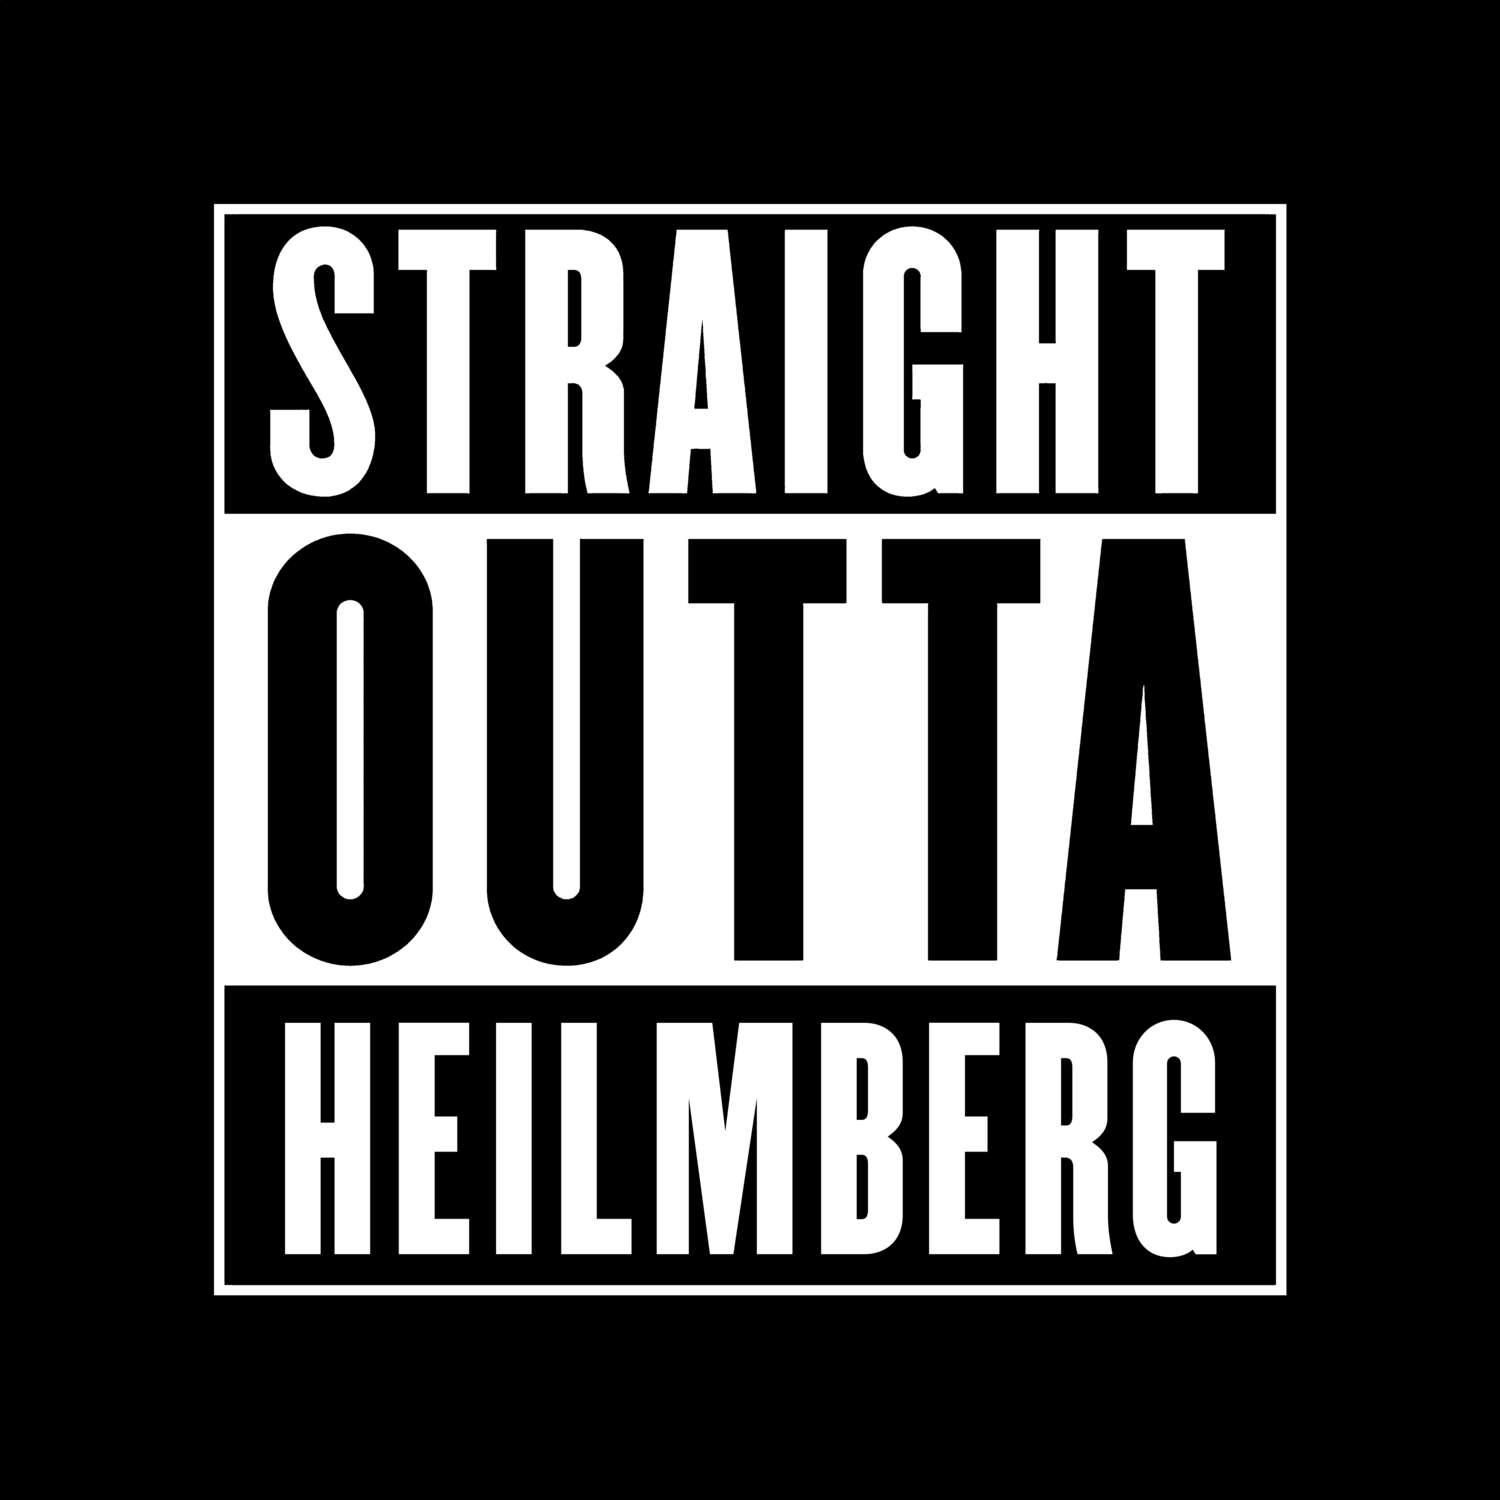 Heilmberg T-Shirt »Straight Outta«